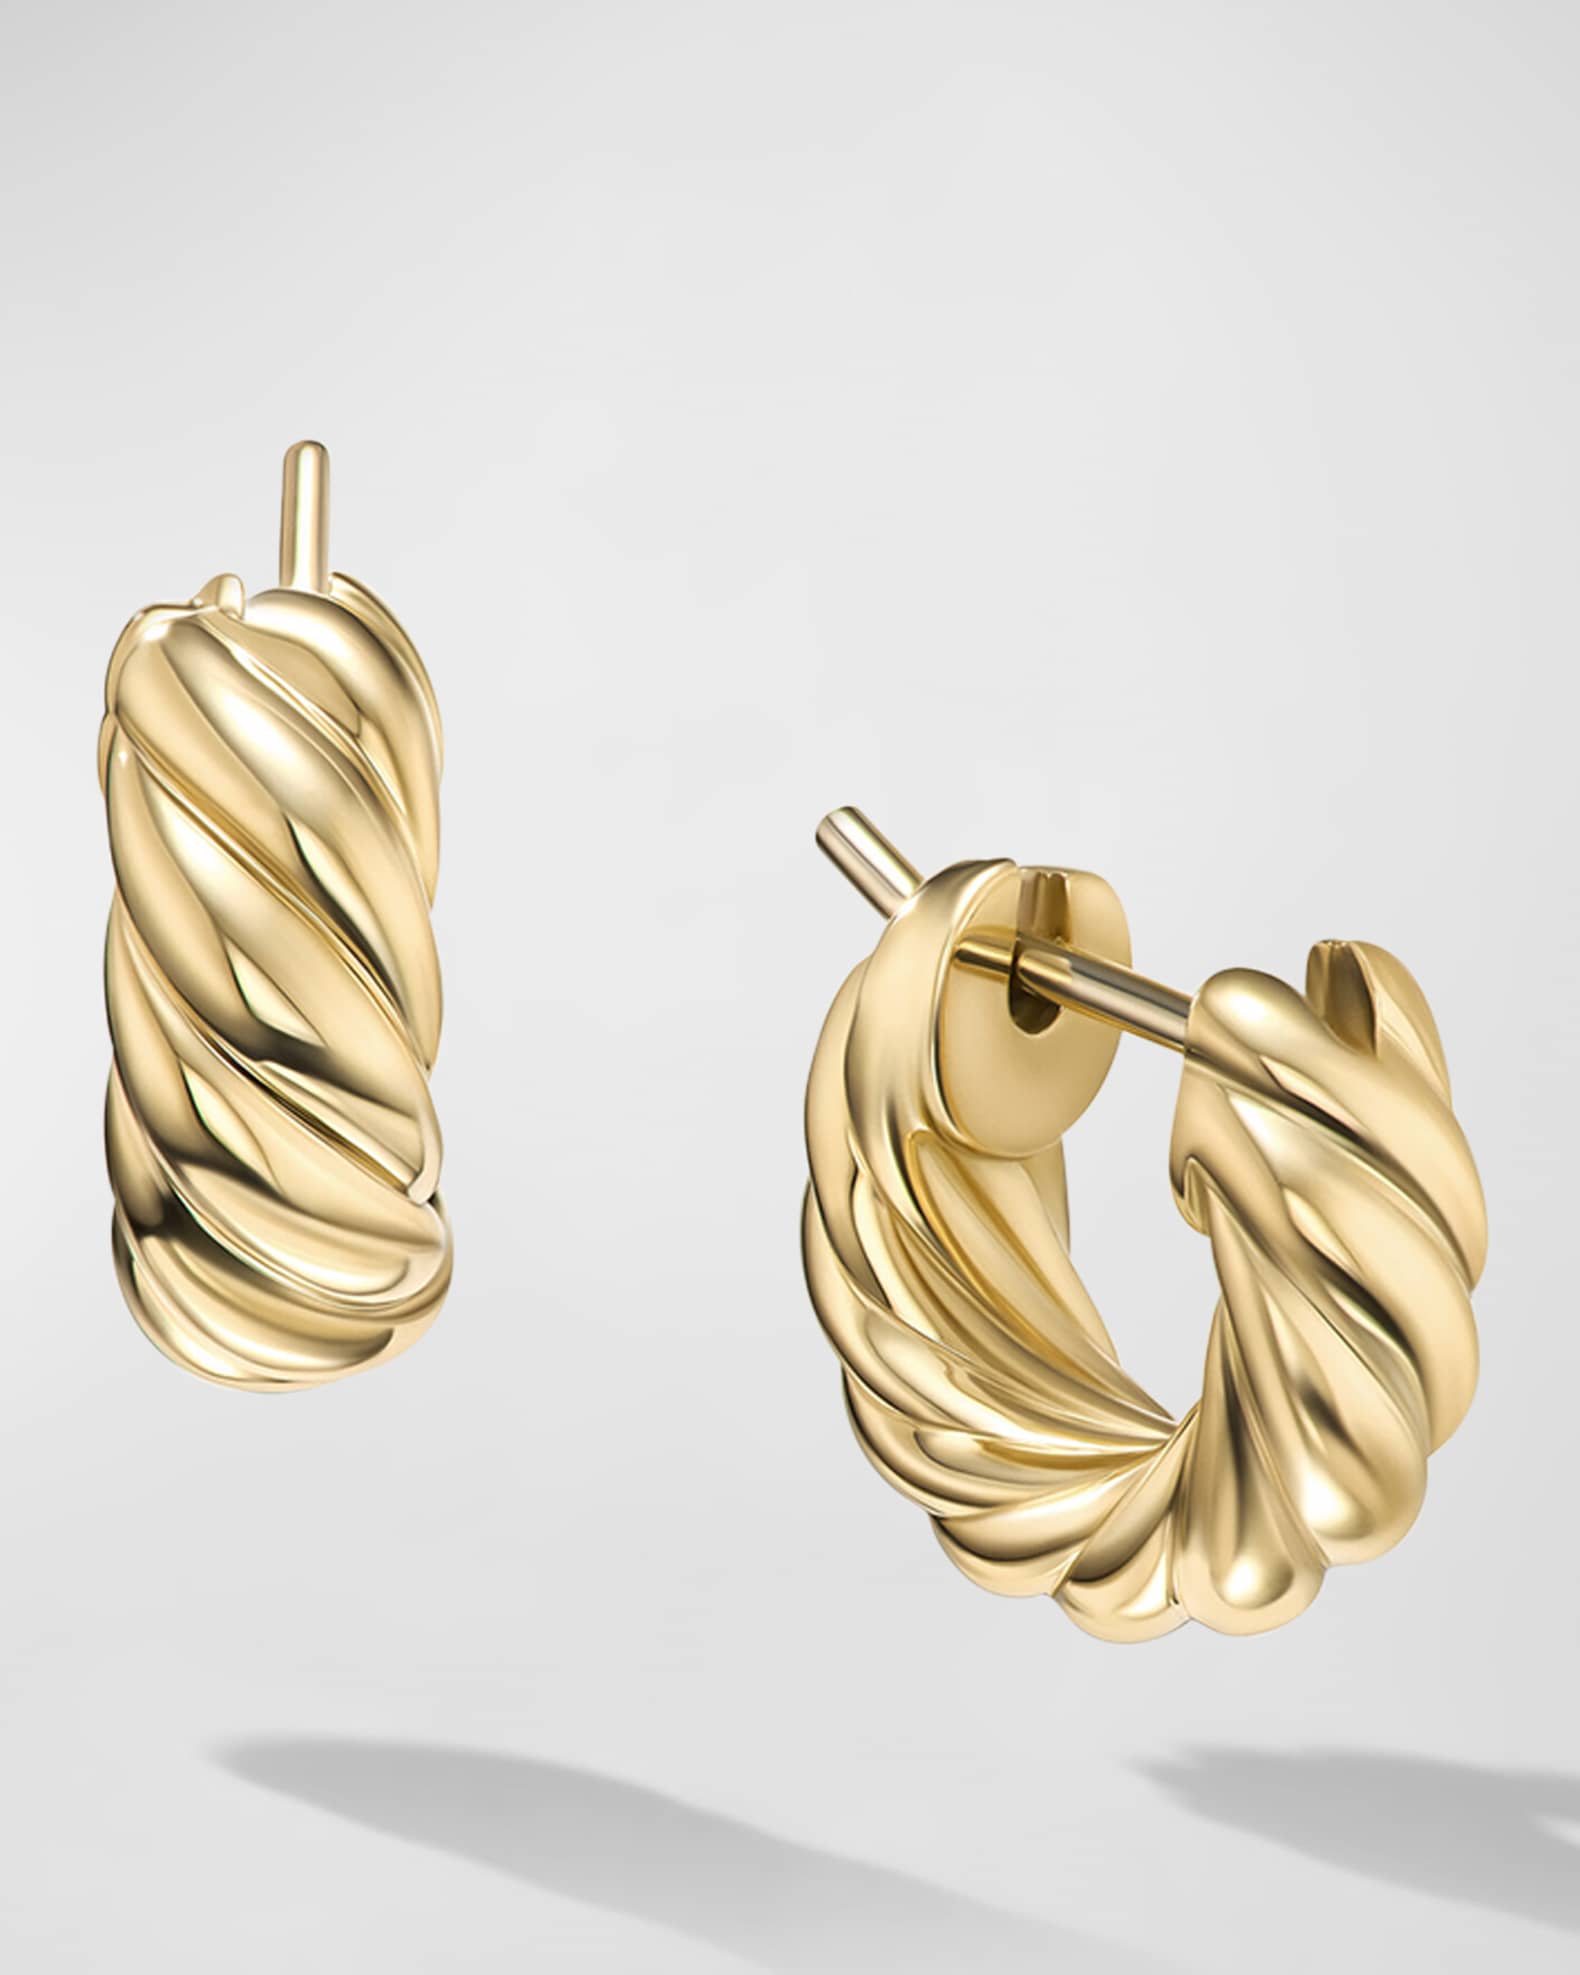 David Yurman Sculpted Cable Earrings in 18K Gold, 5.4mm, 0.5